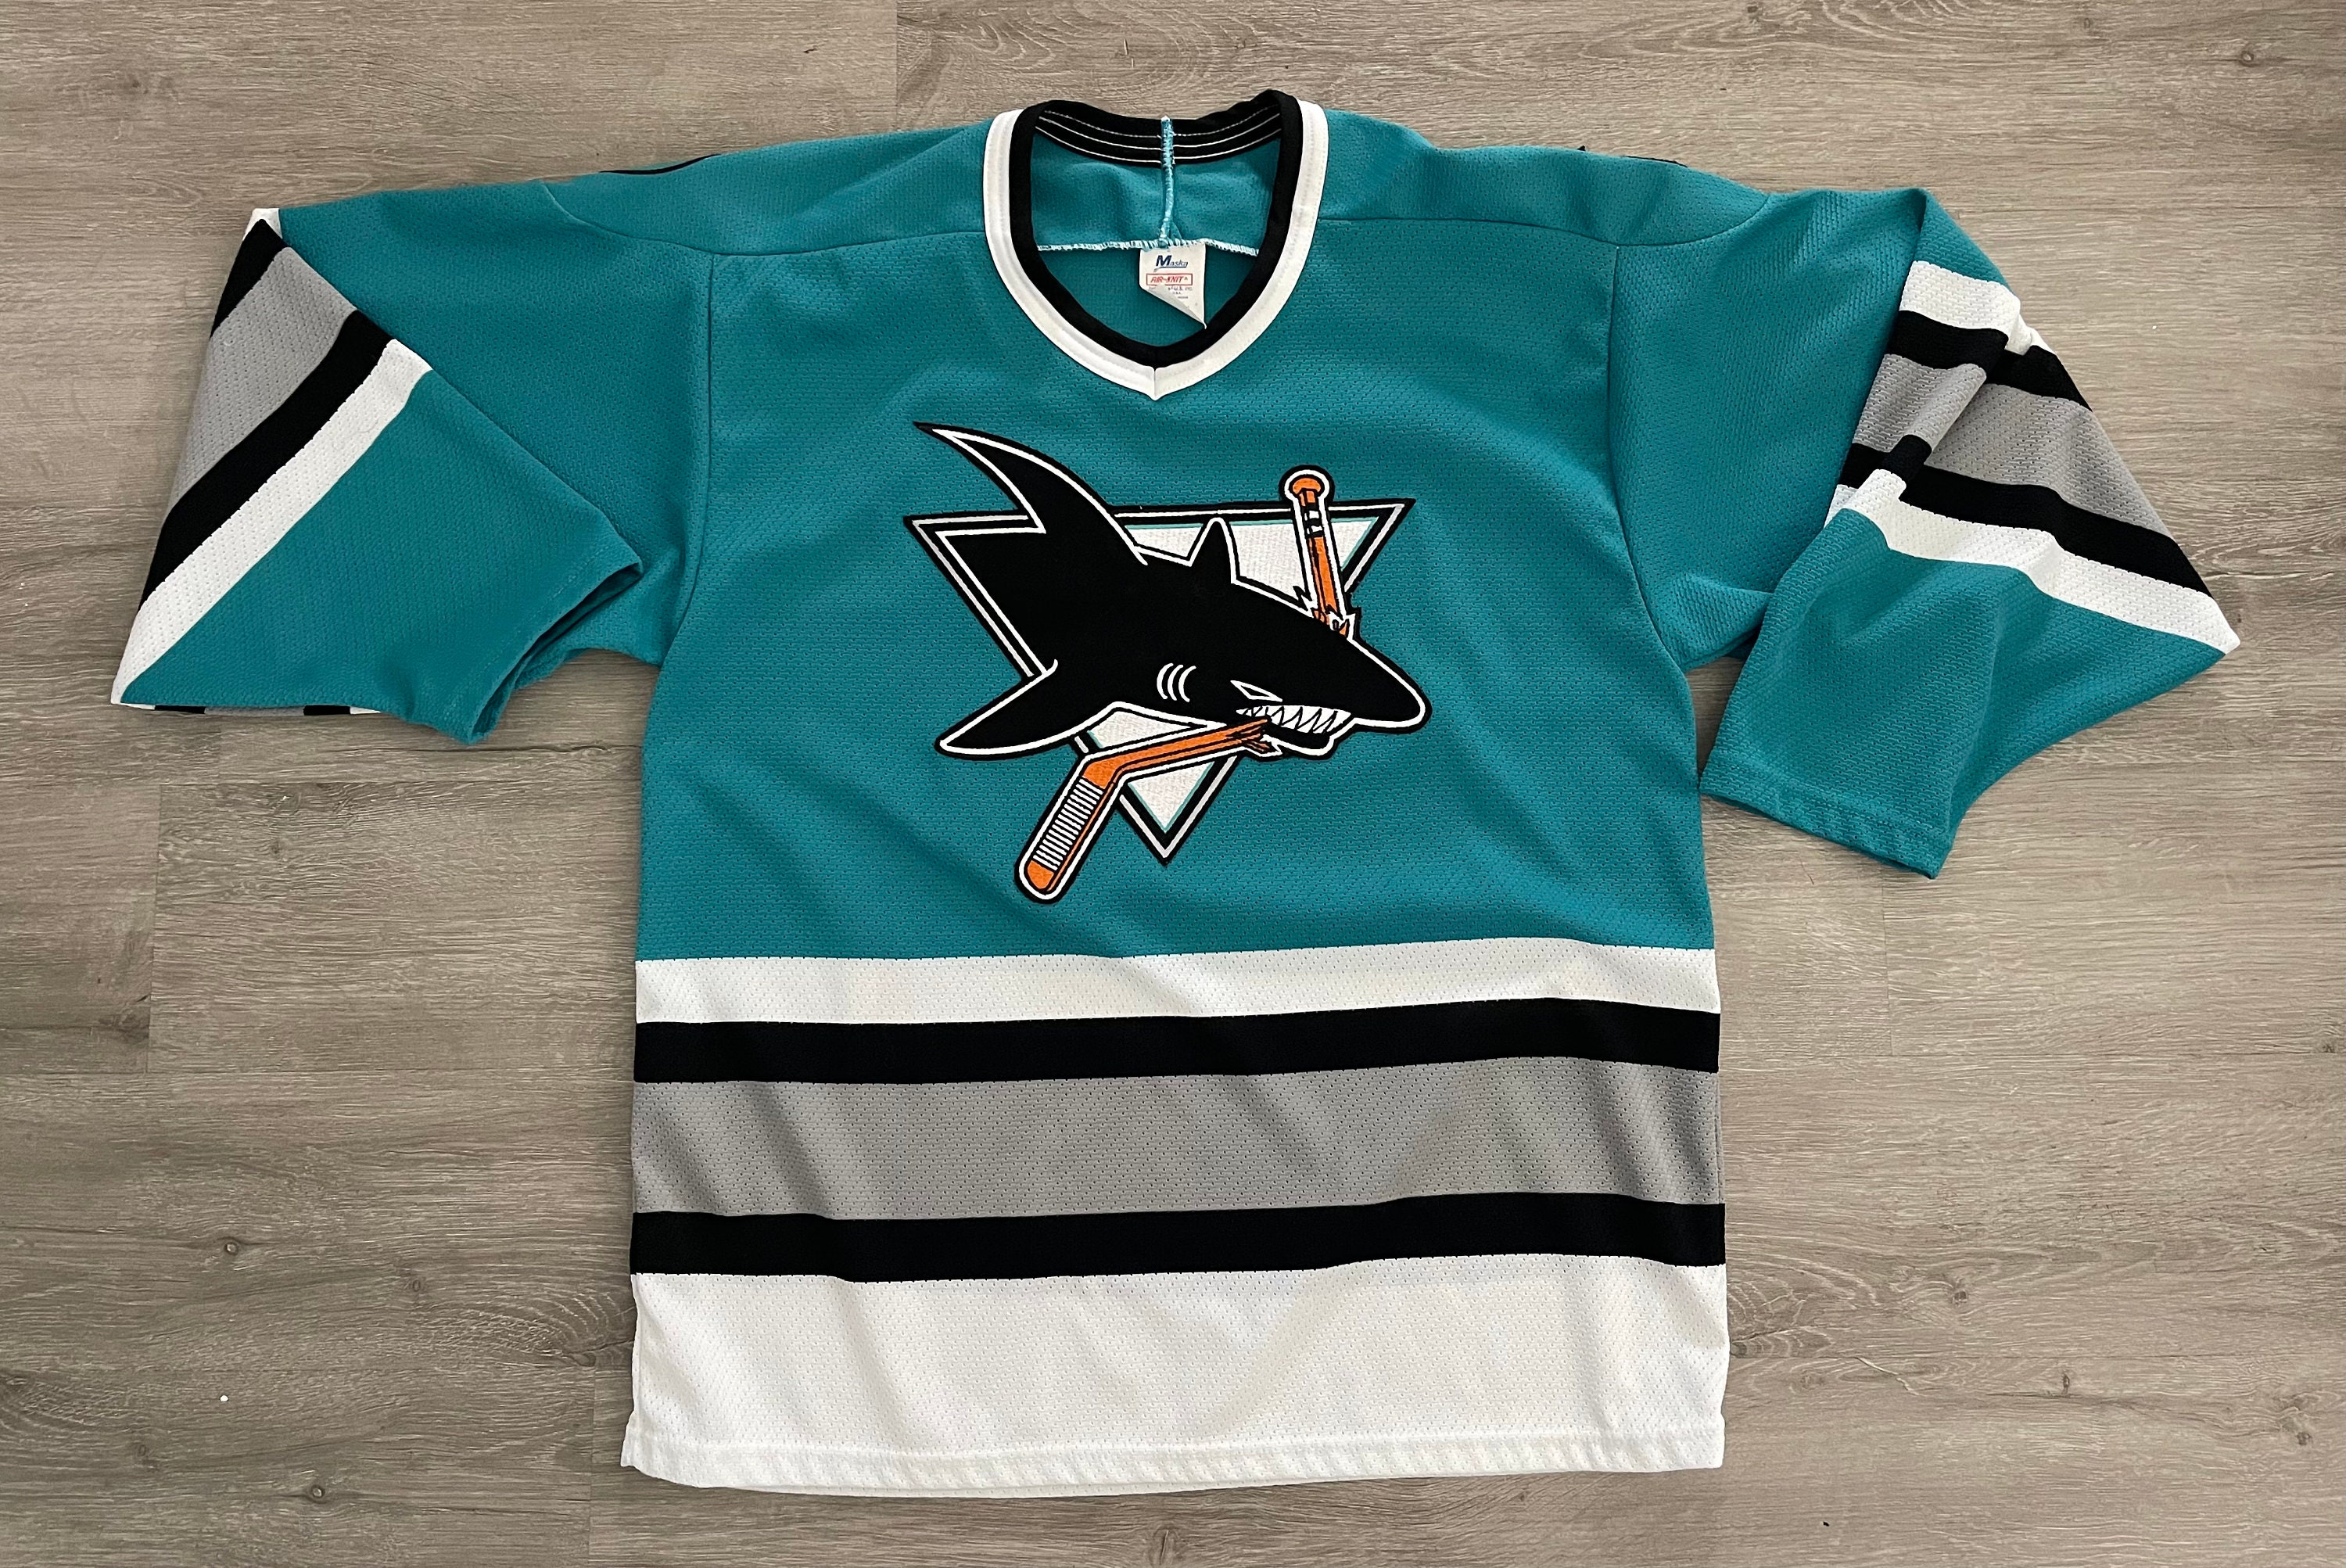 San Jose Sharks - Give the gift of Sharks hockey 🎁 The